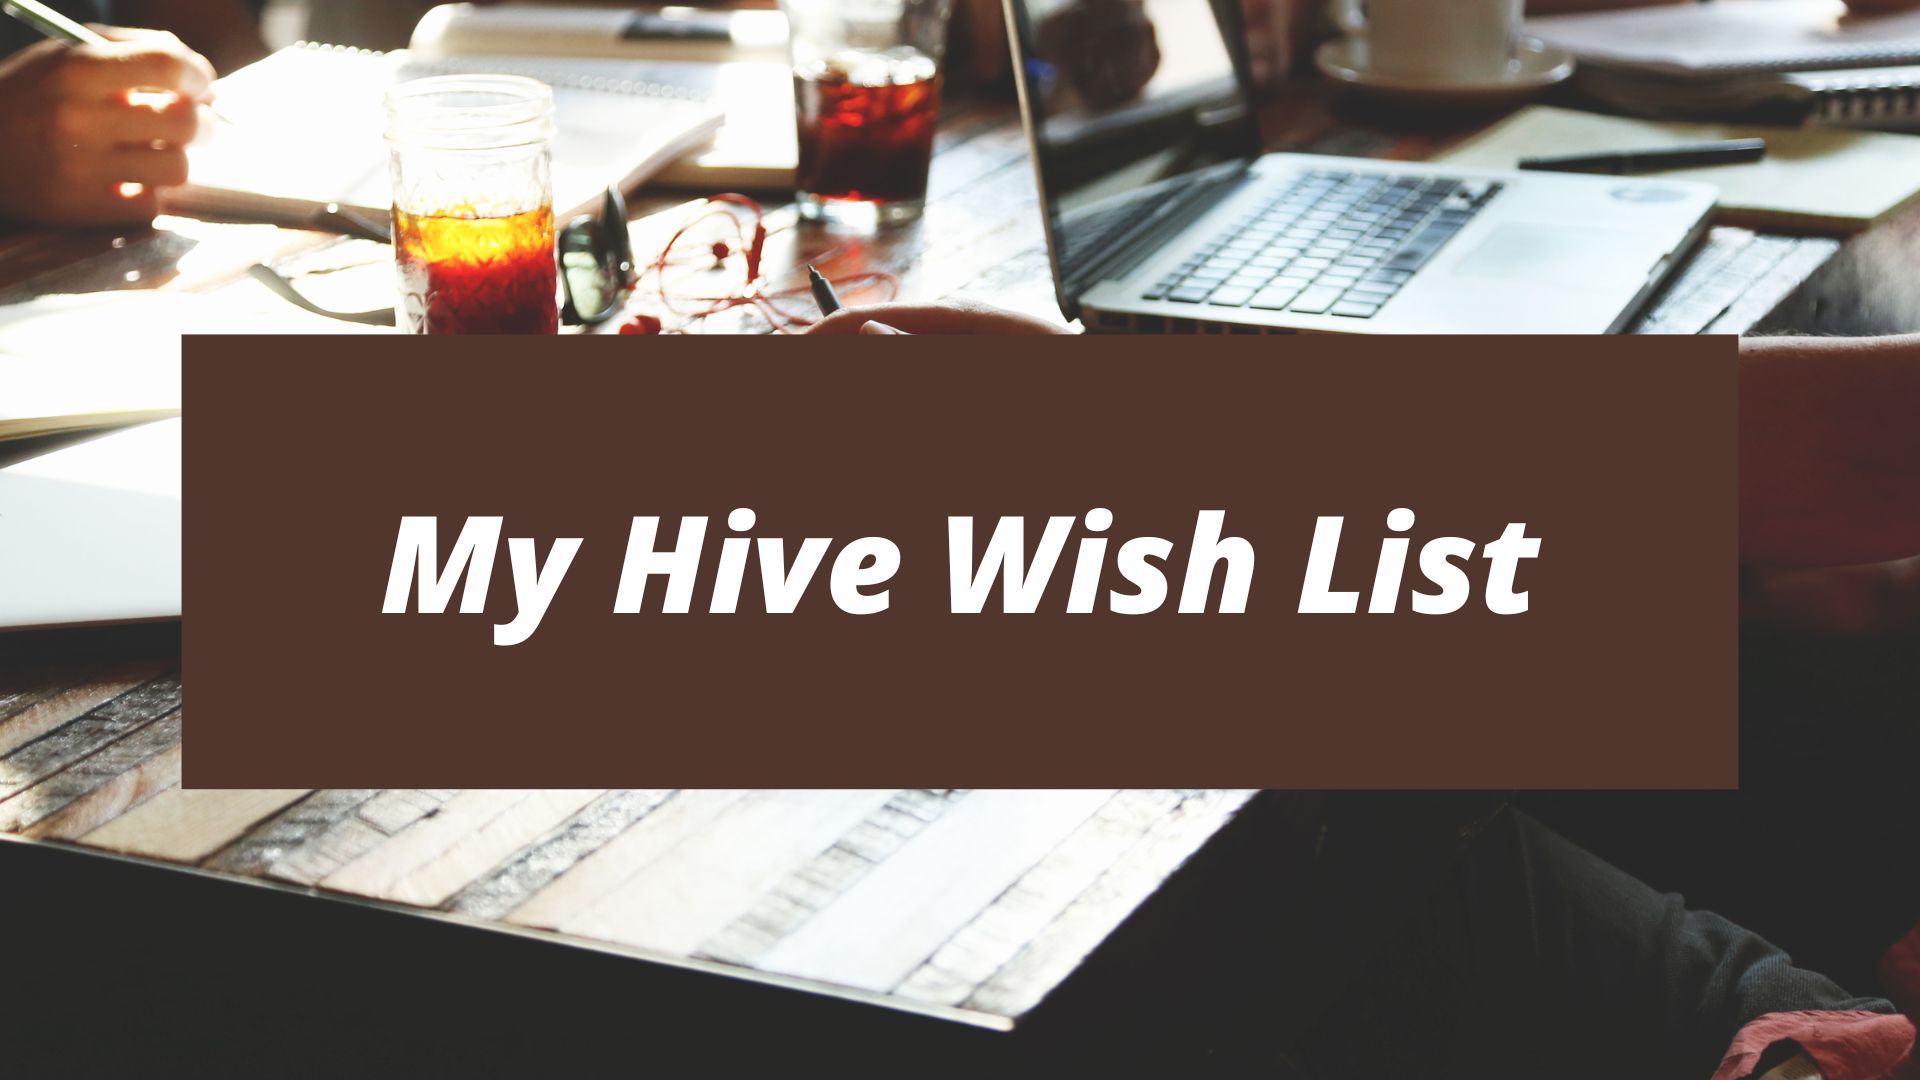 @achim03/my-hive-wish-list